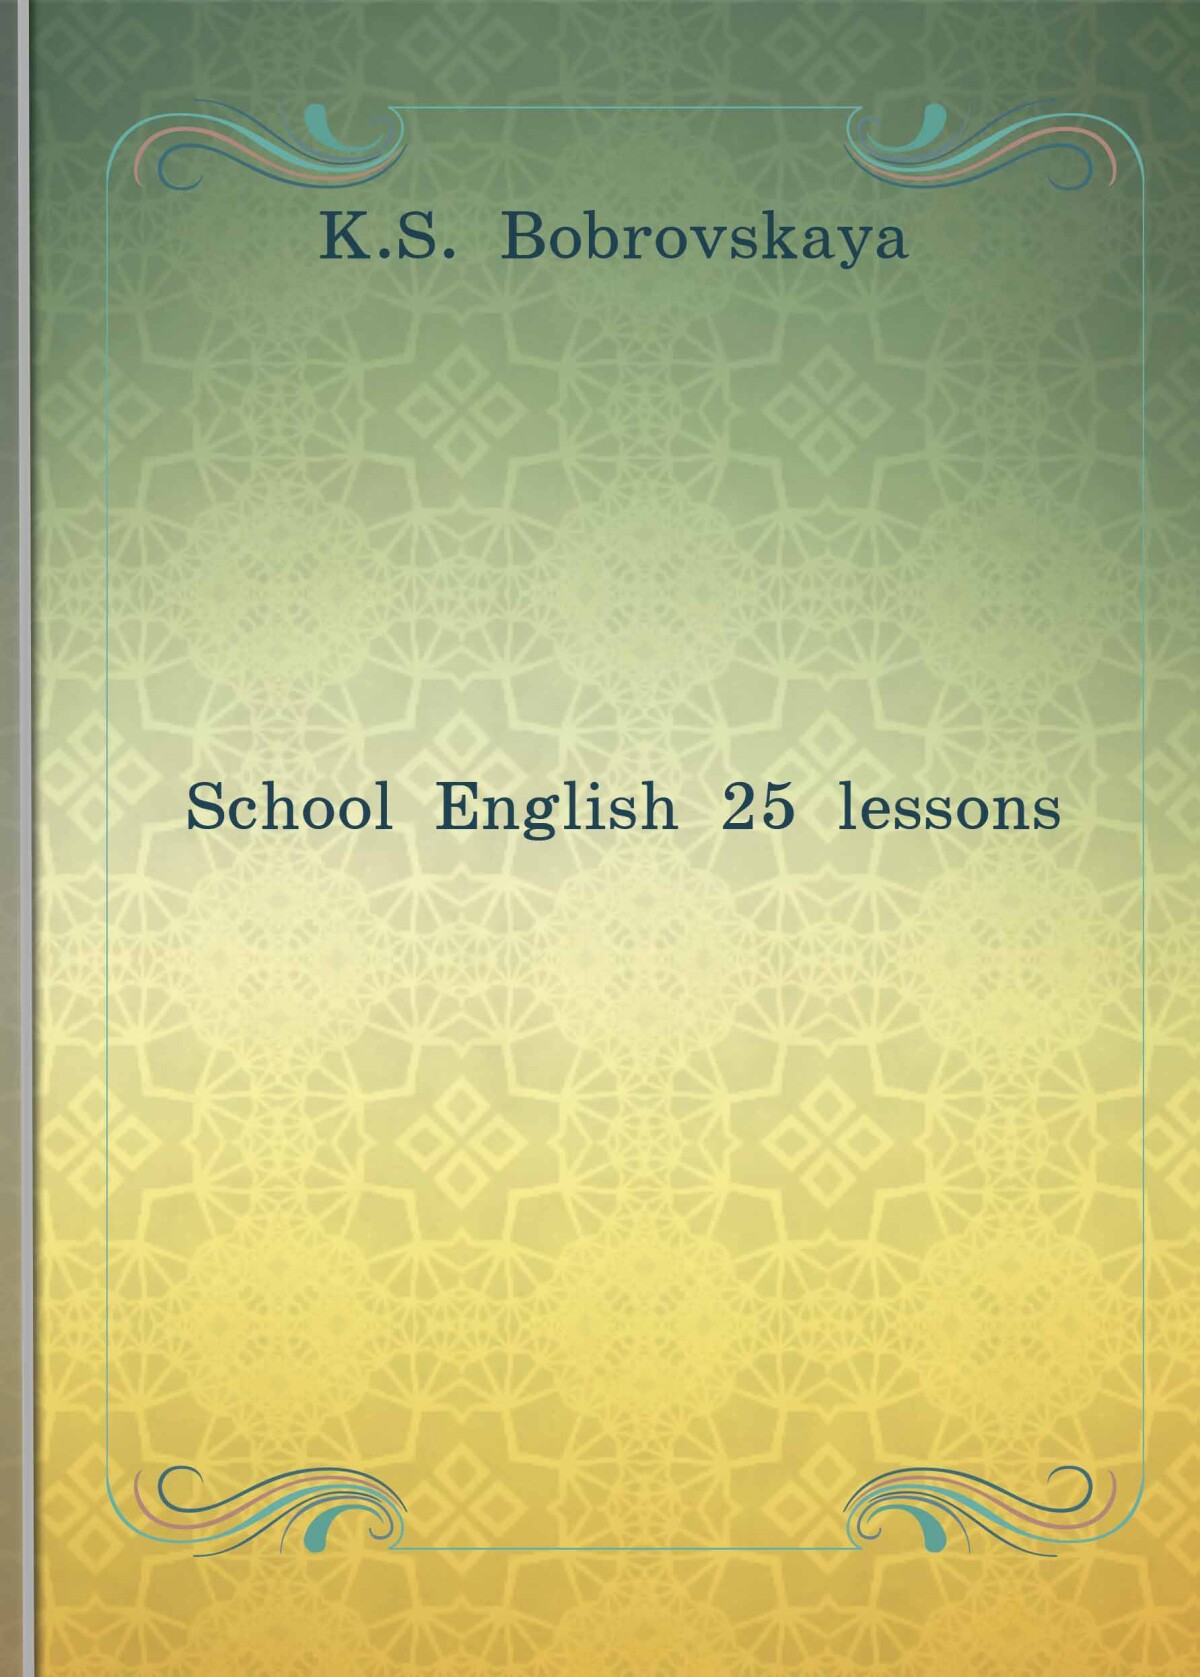 School English. 25 lessons